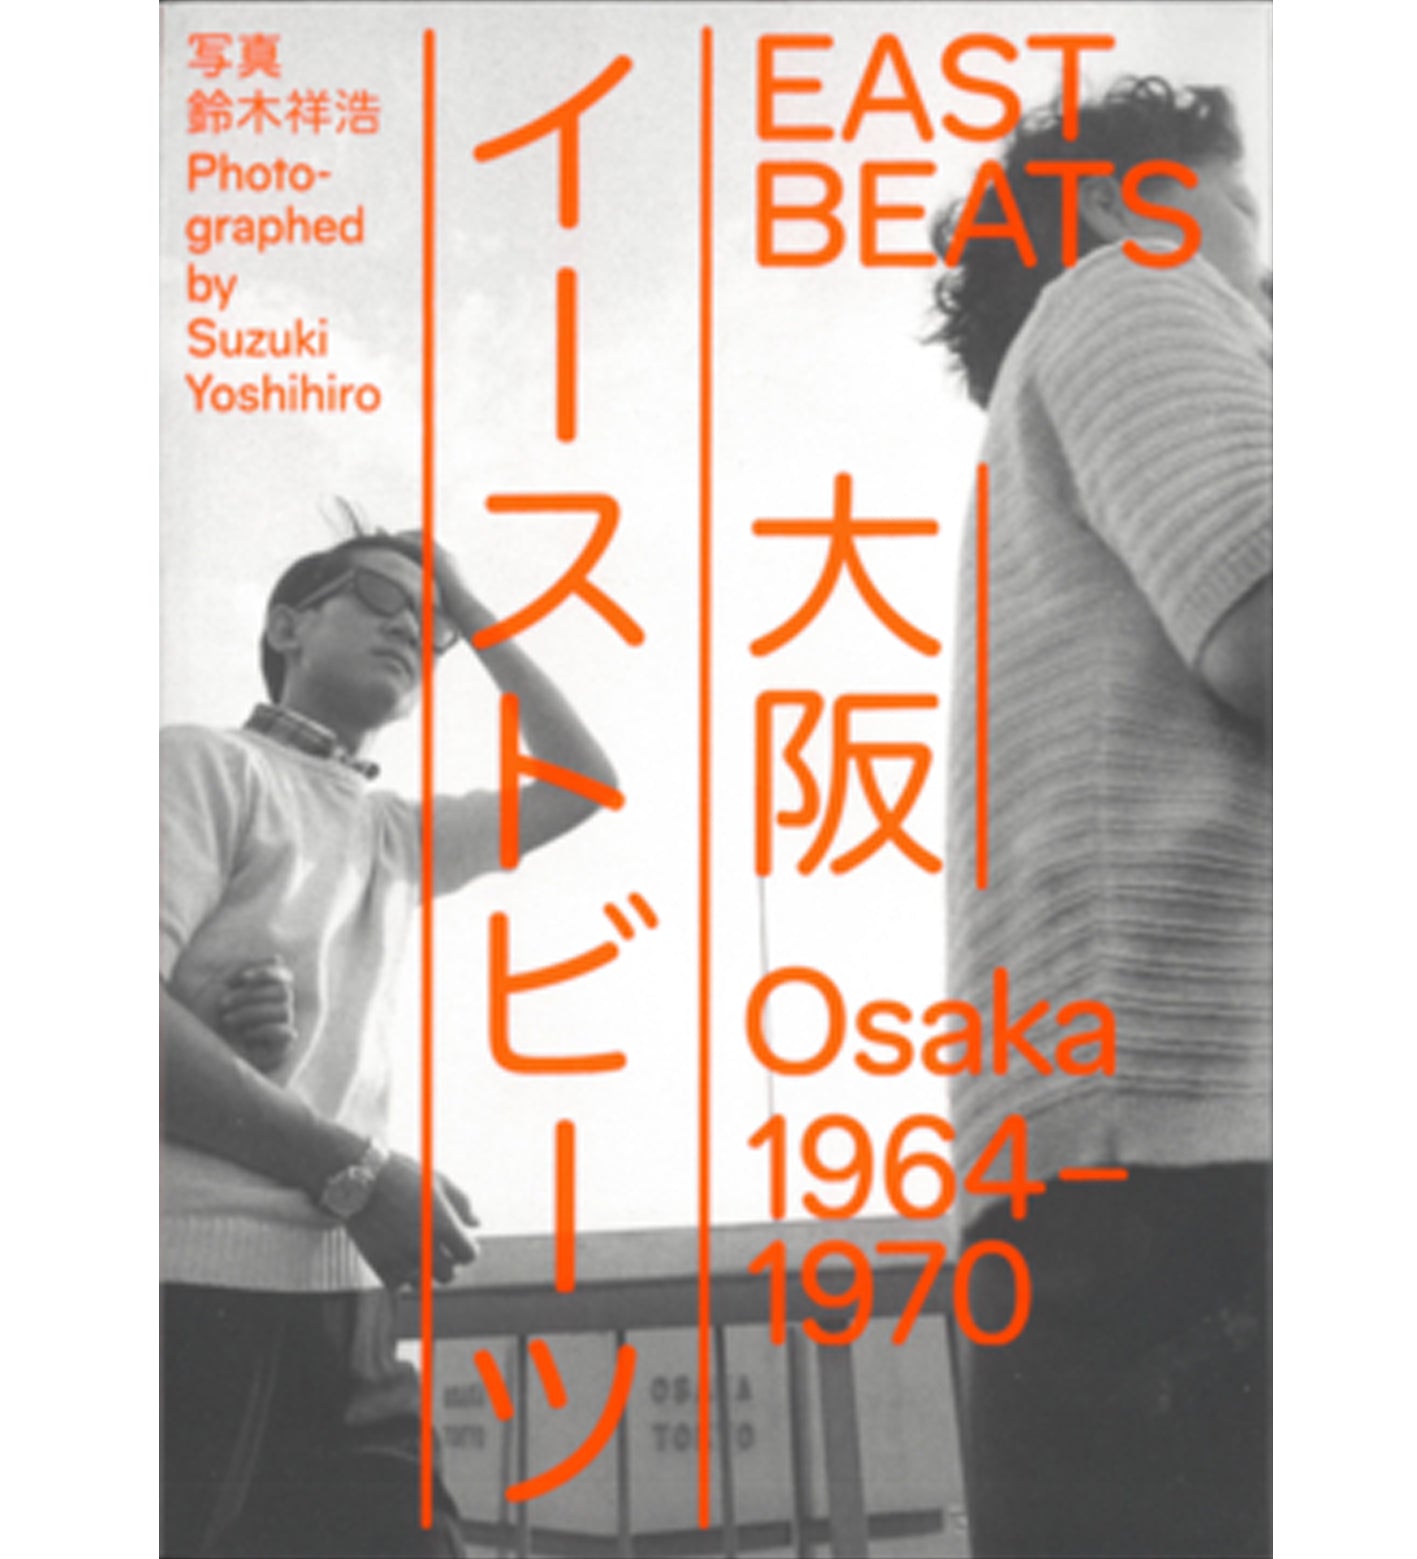 Yoshihiro Suzuki: Eastbeats. Osaka 1964-1970